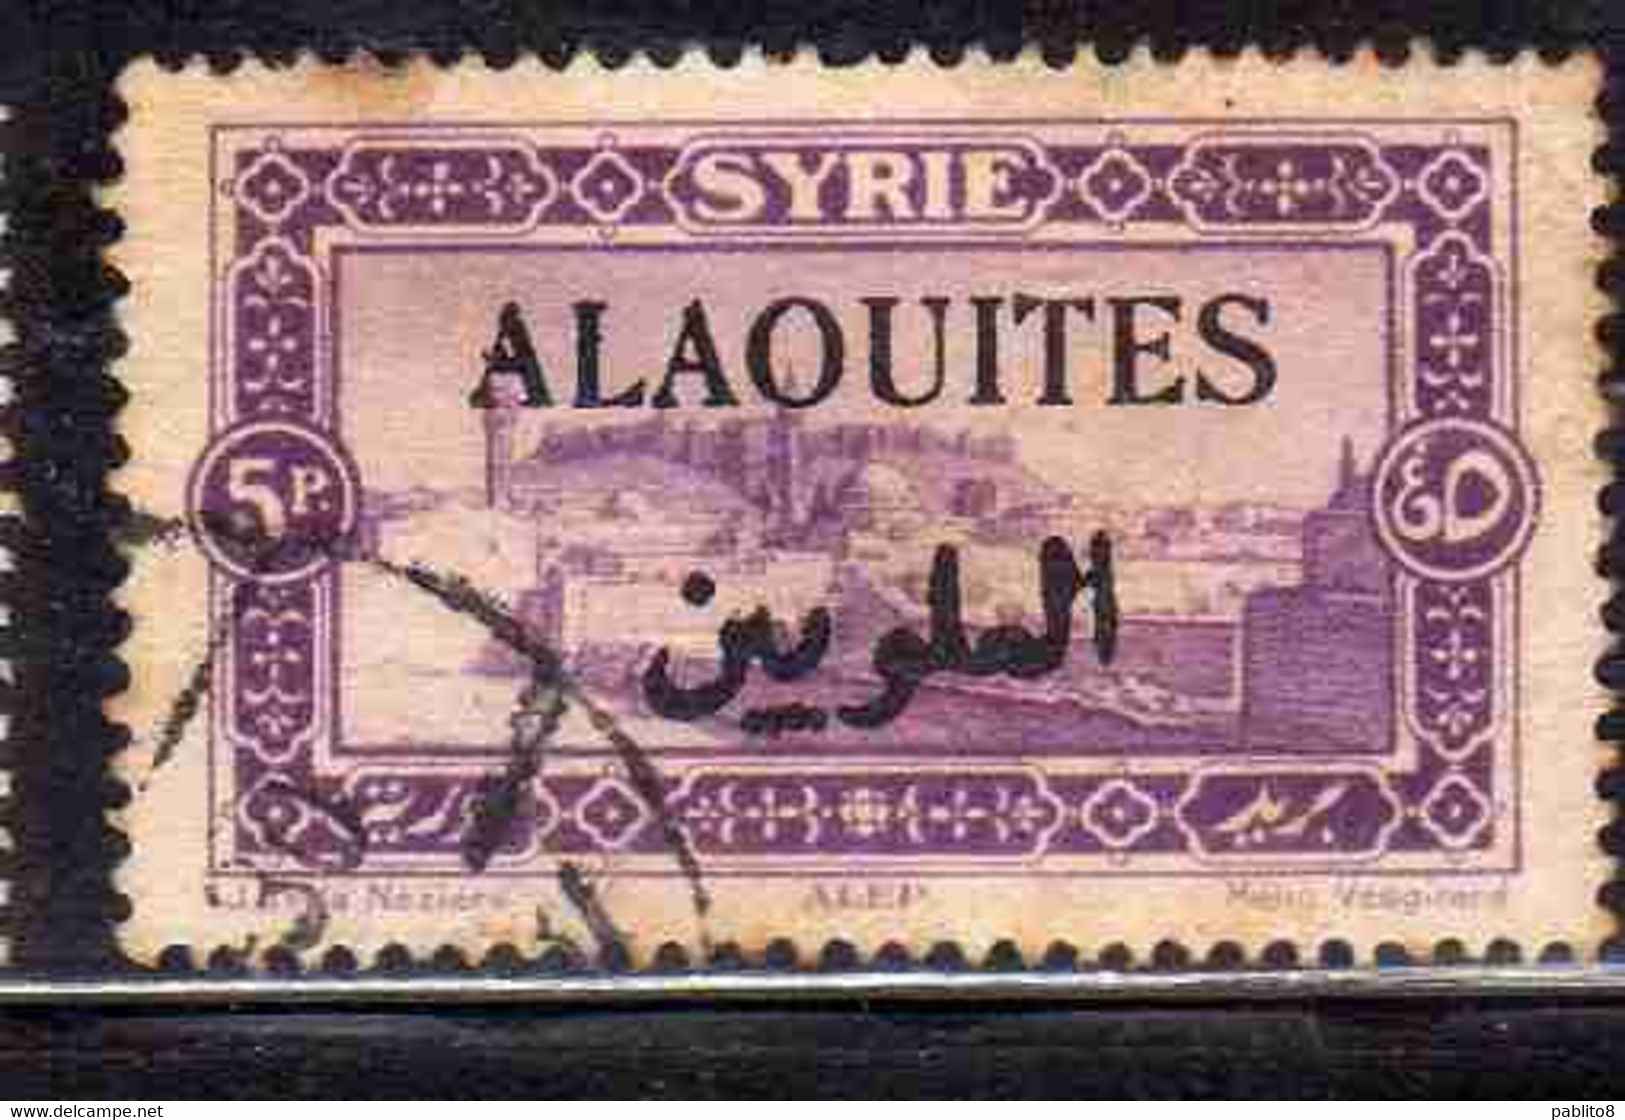 ALAOUITES SYRIA SIRIA ALAQUITES 1925 VIEW OF ALEPPO 5p USED USATO OBLITERE' - Usati